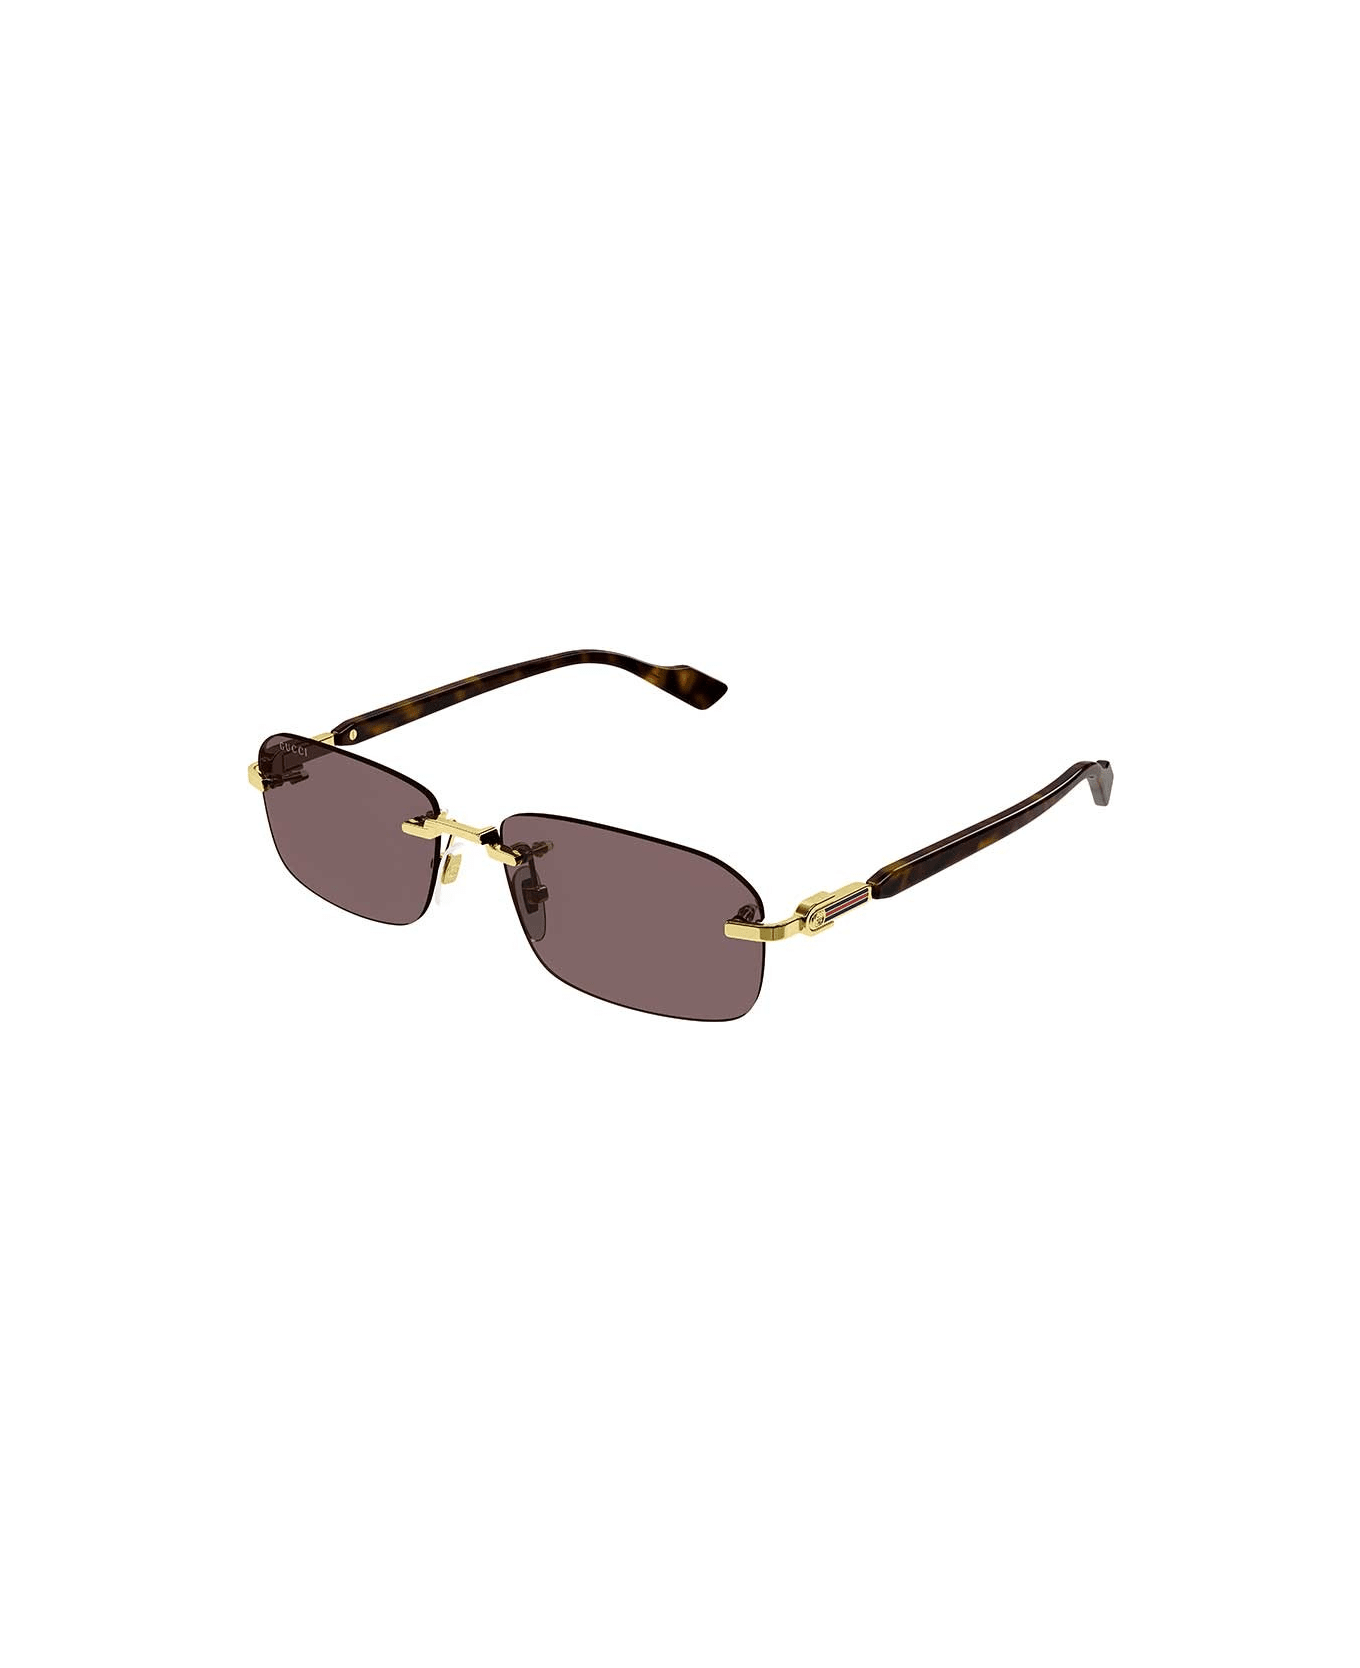 Gucci Eyewear Sunglasses - Marrone/Marrone サングラス